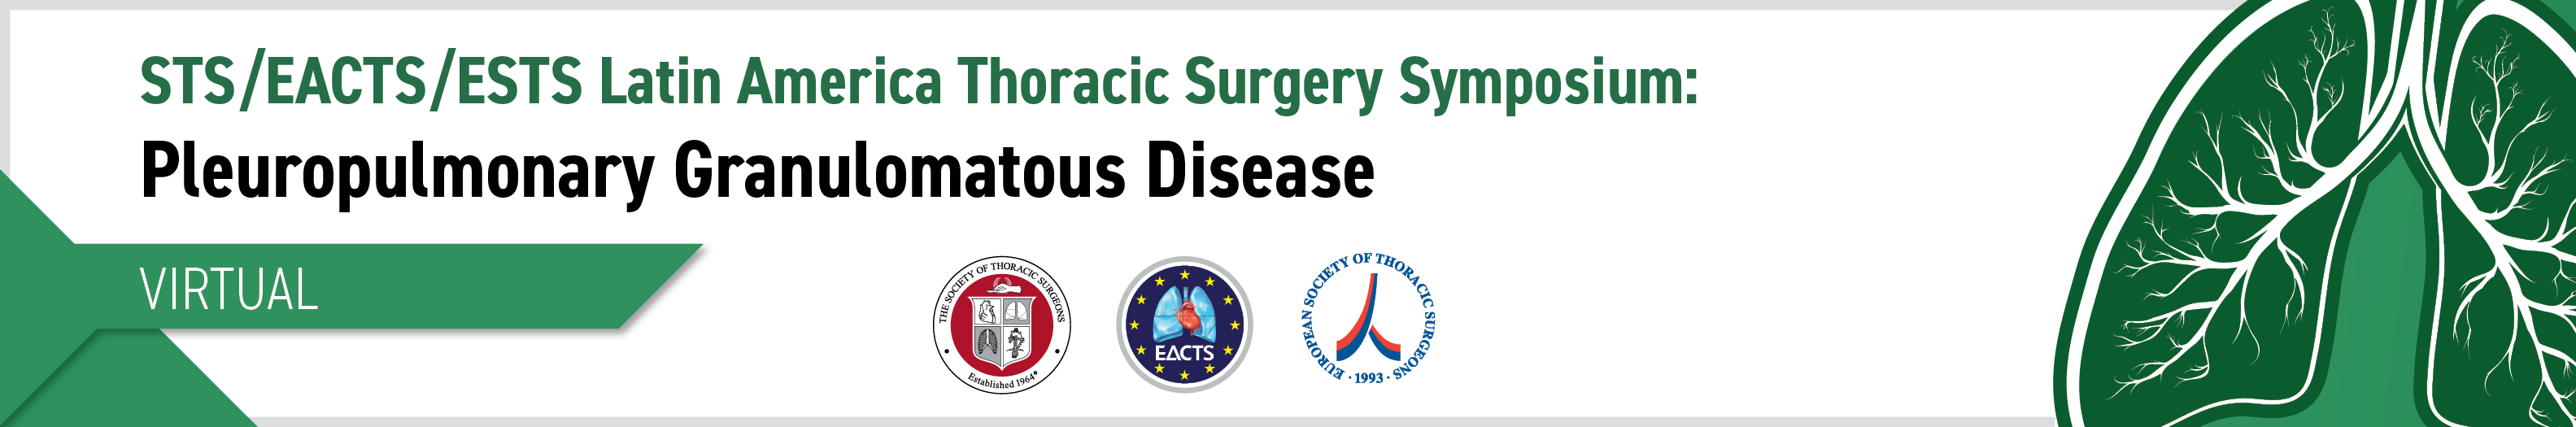 STS/EACTS/ESTS Latin America Thoracic Surgery Symposium: Pleuropulmonary Granulomatous Disease